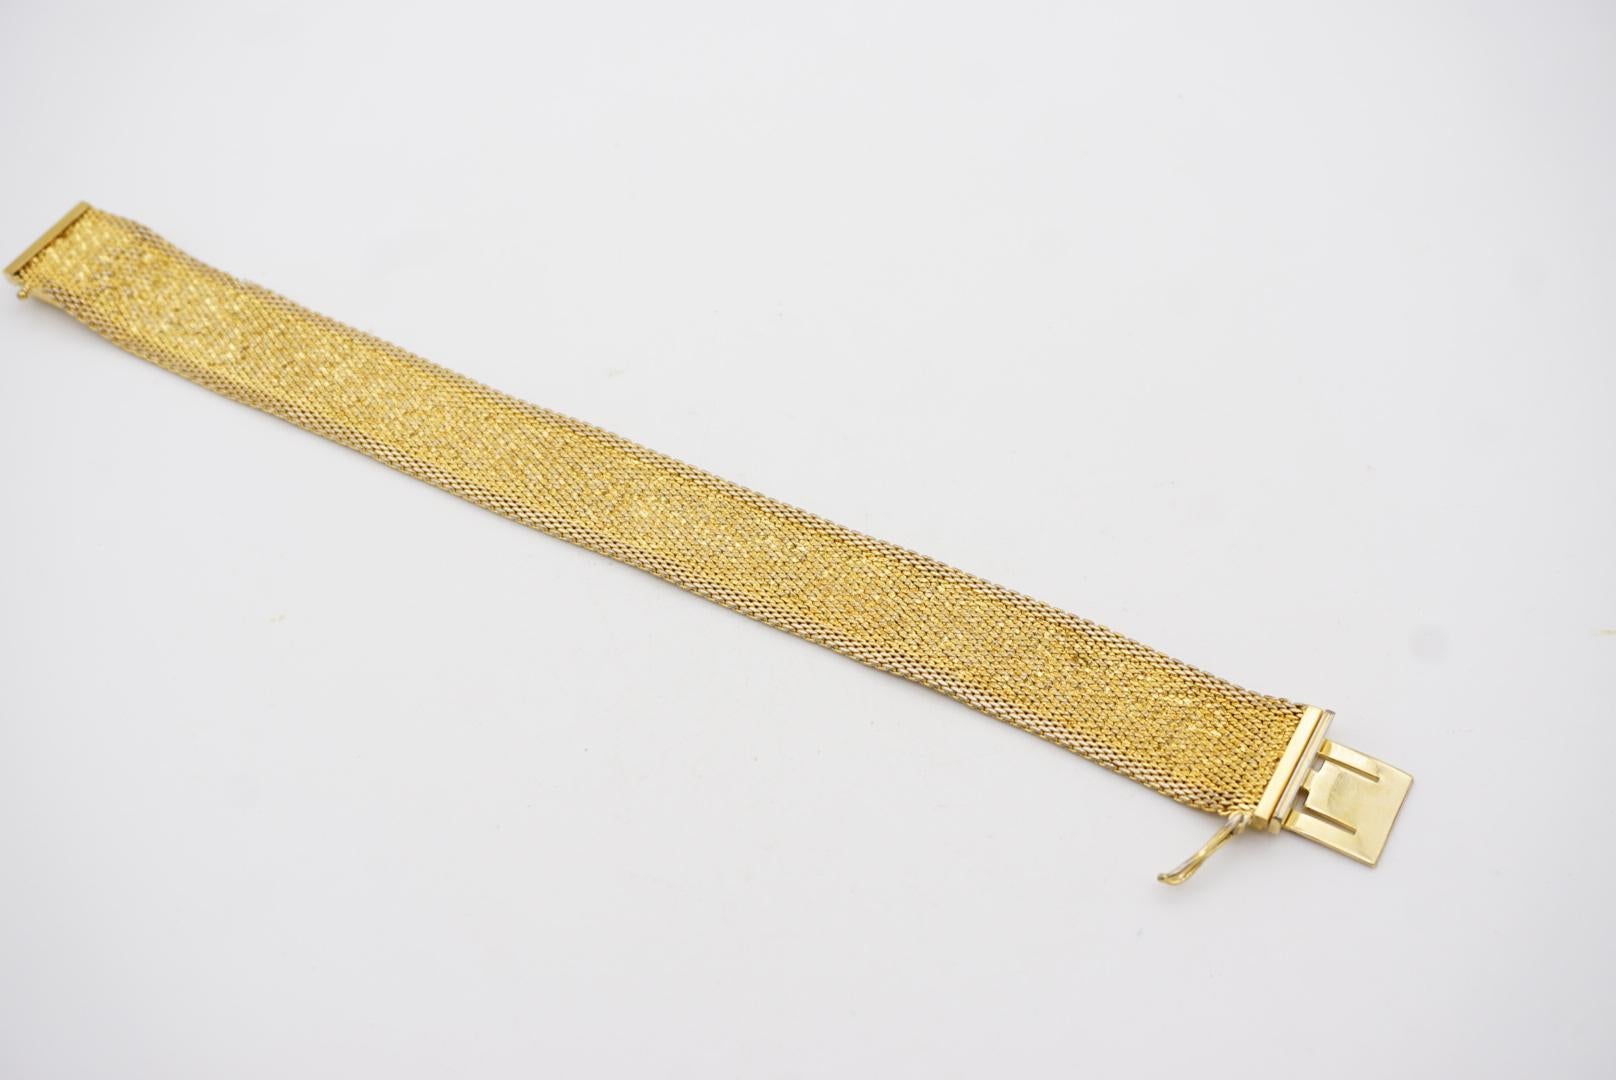 Christian Dior GROSSE 1966 Ridged Link Mesh Weave Modernist Gold Cuff Bracelet  6